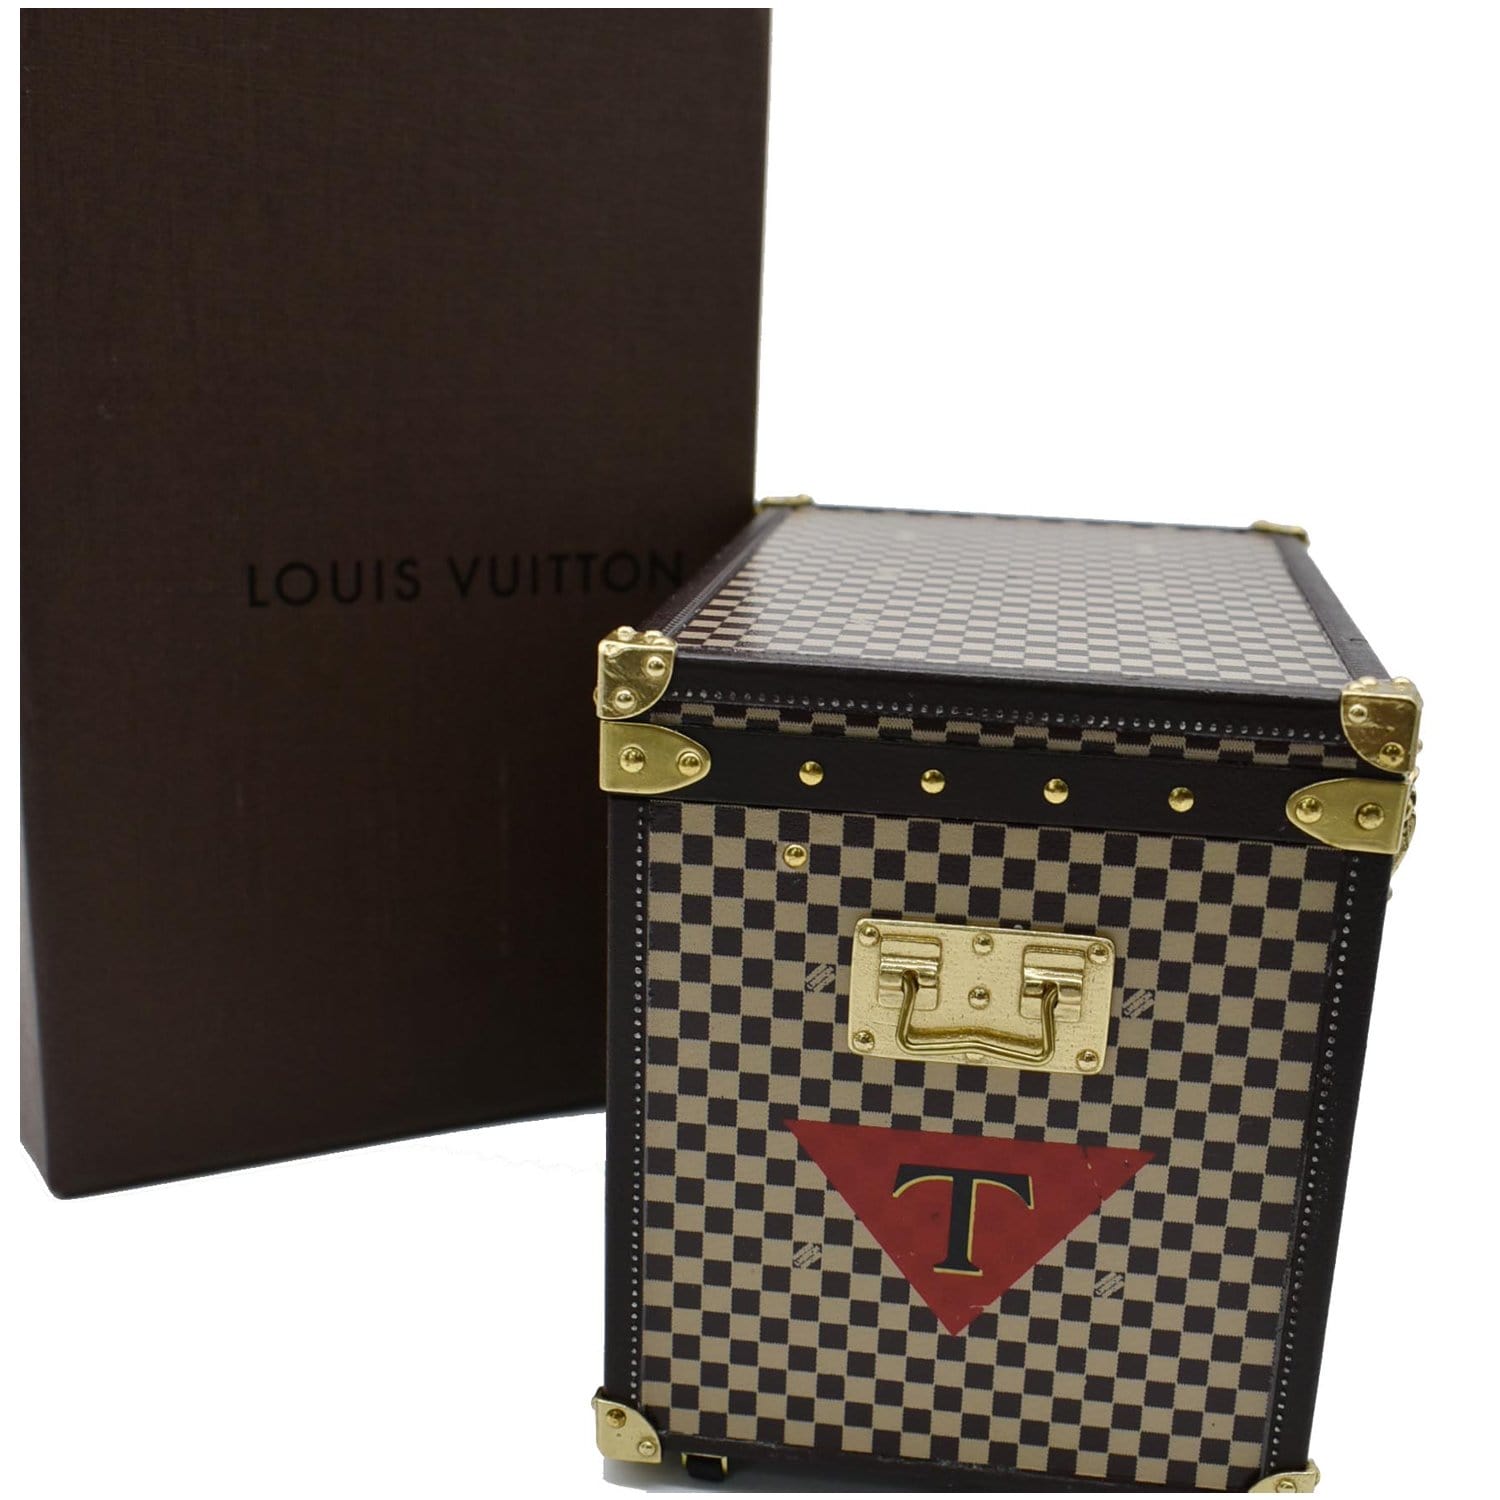 Louis Vuitton, Accessories, Louis Vuitton Jewelry Box